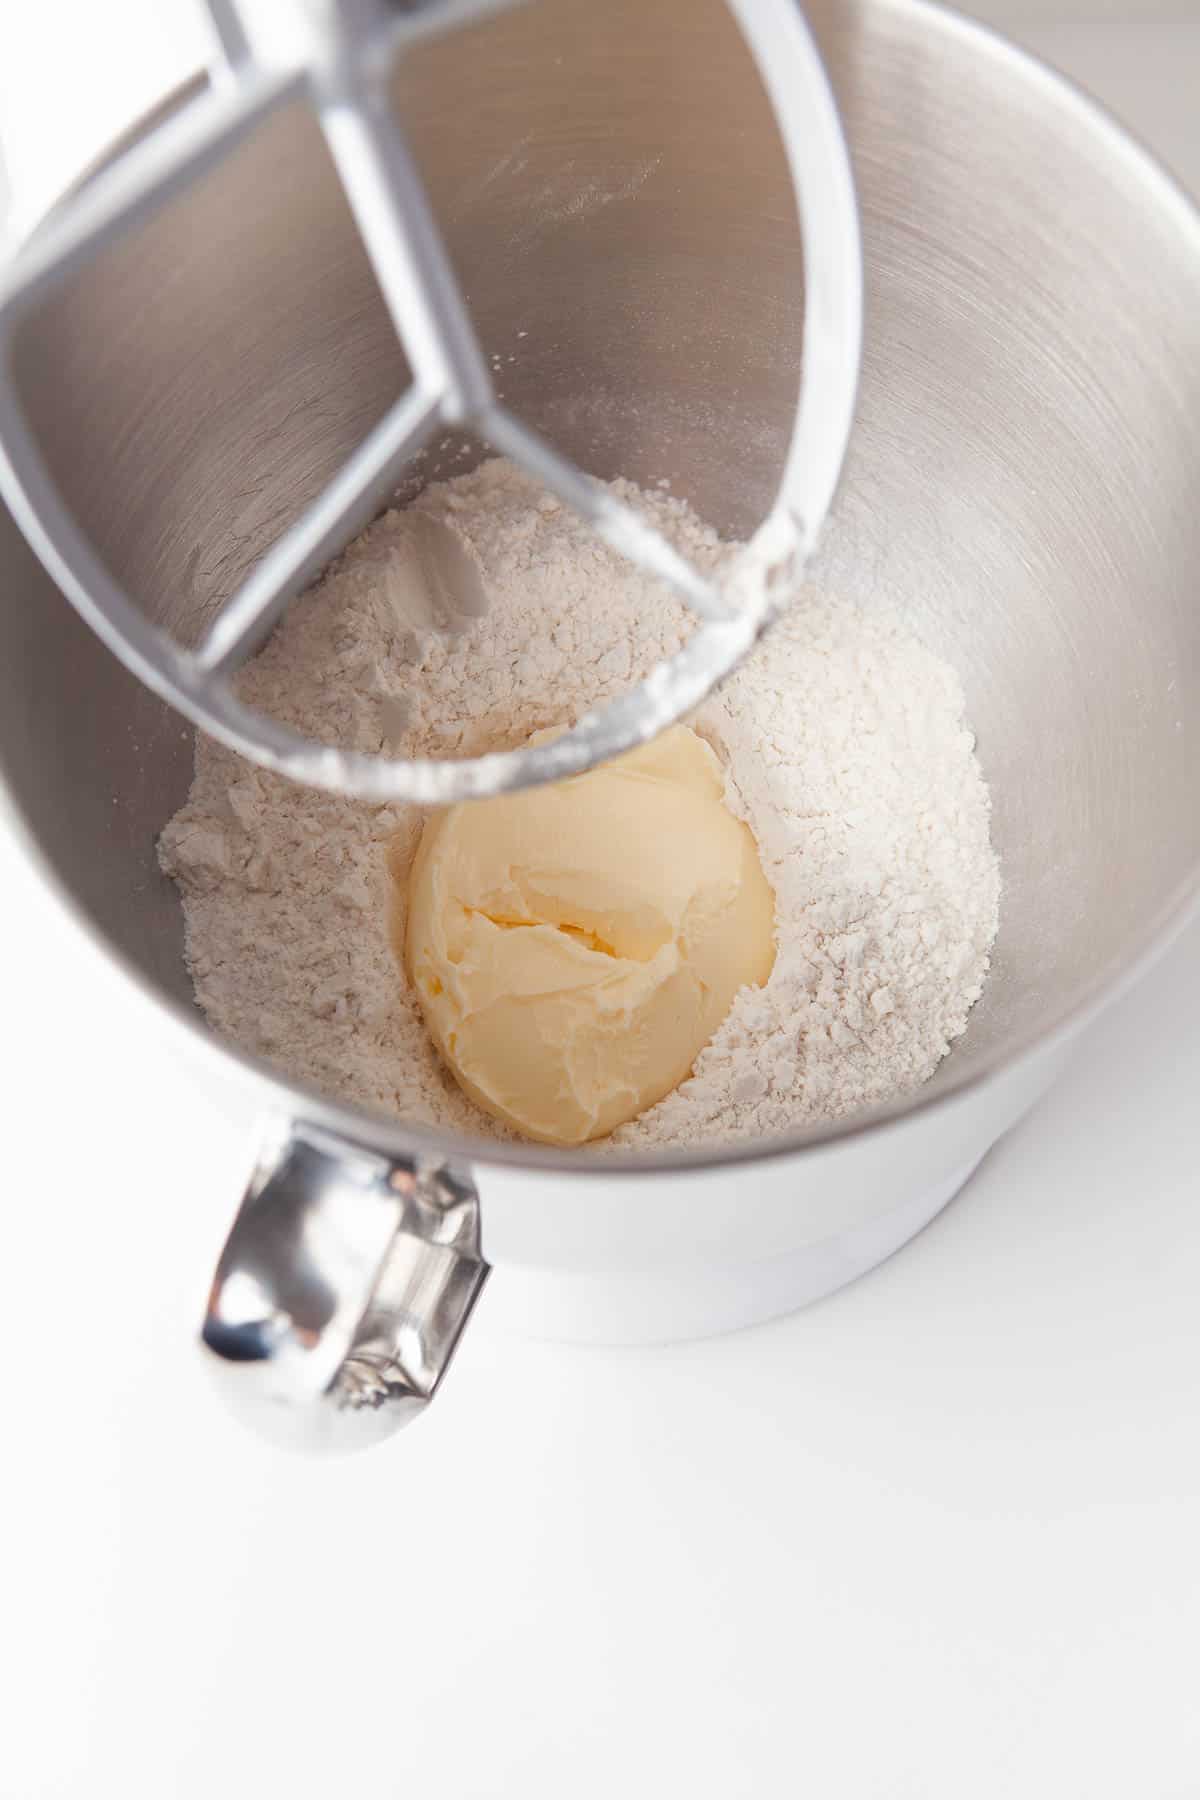 A metal mixing bowl with dulce de leche cookies dough mixture.